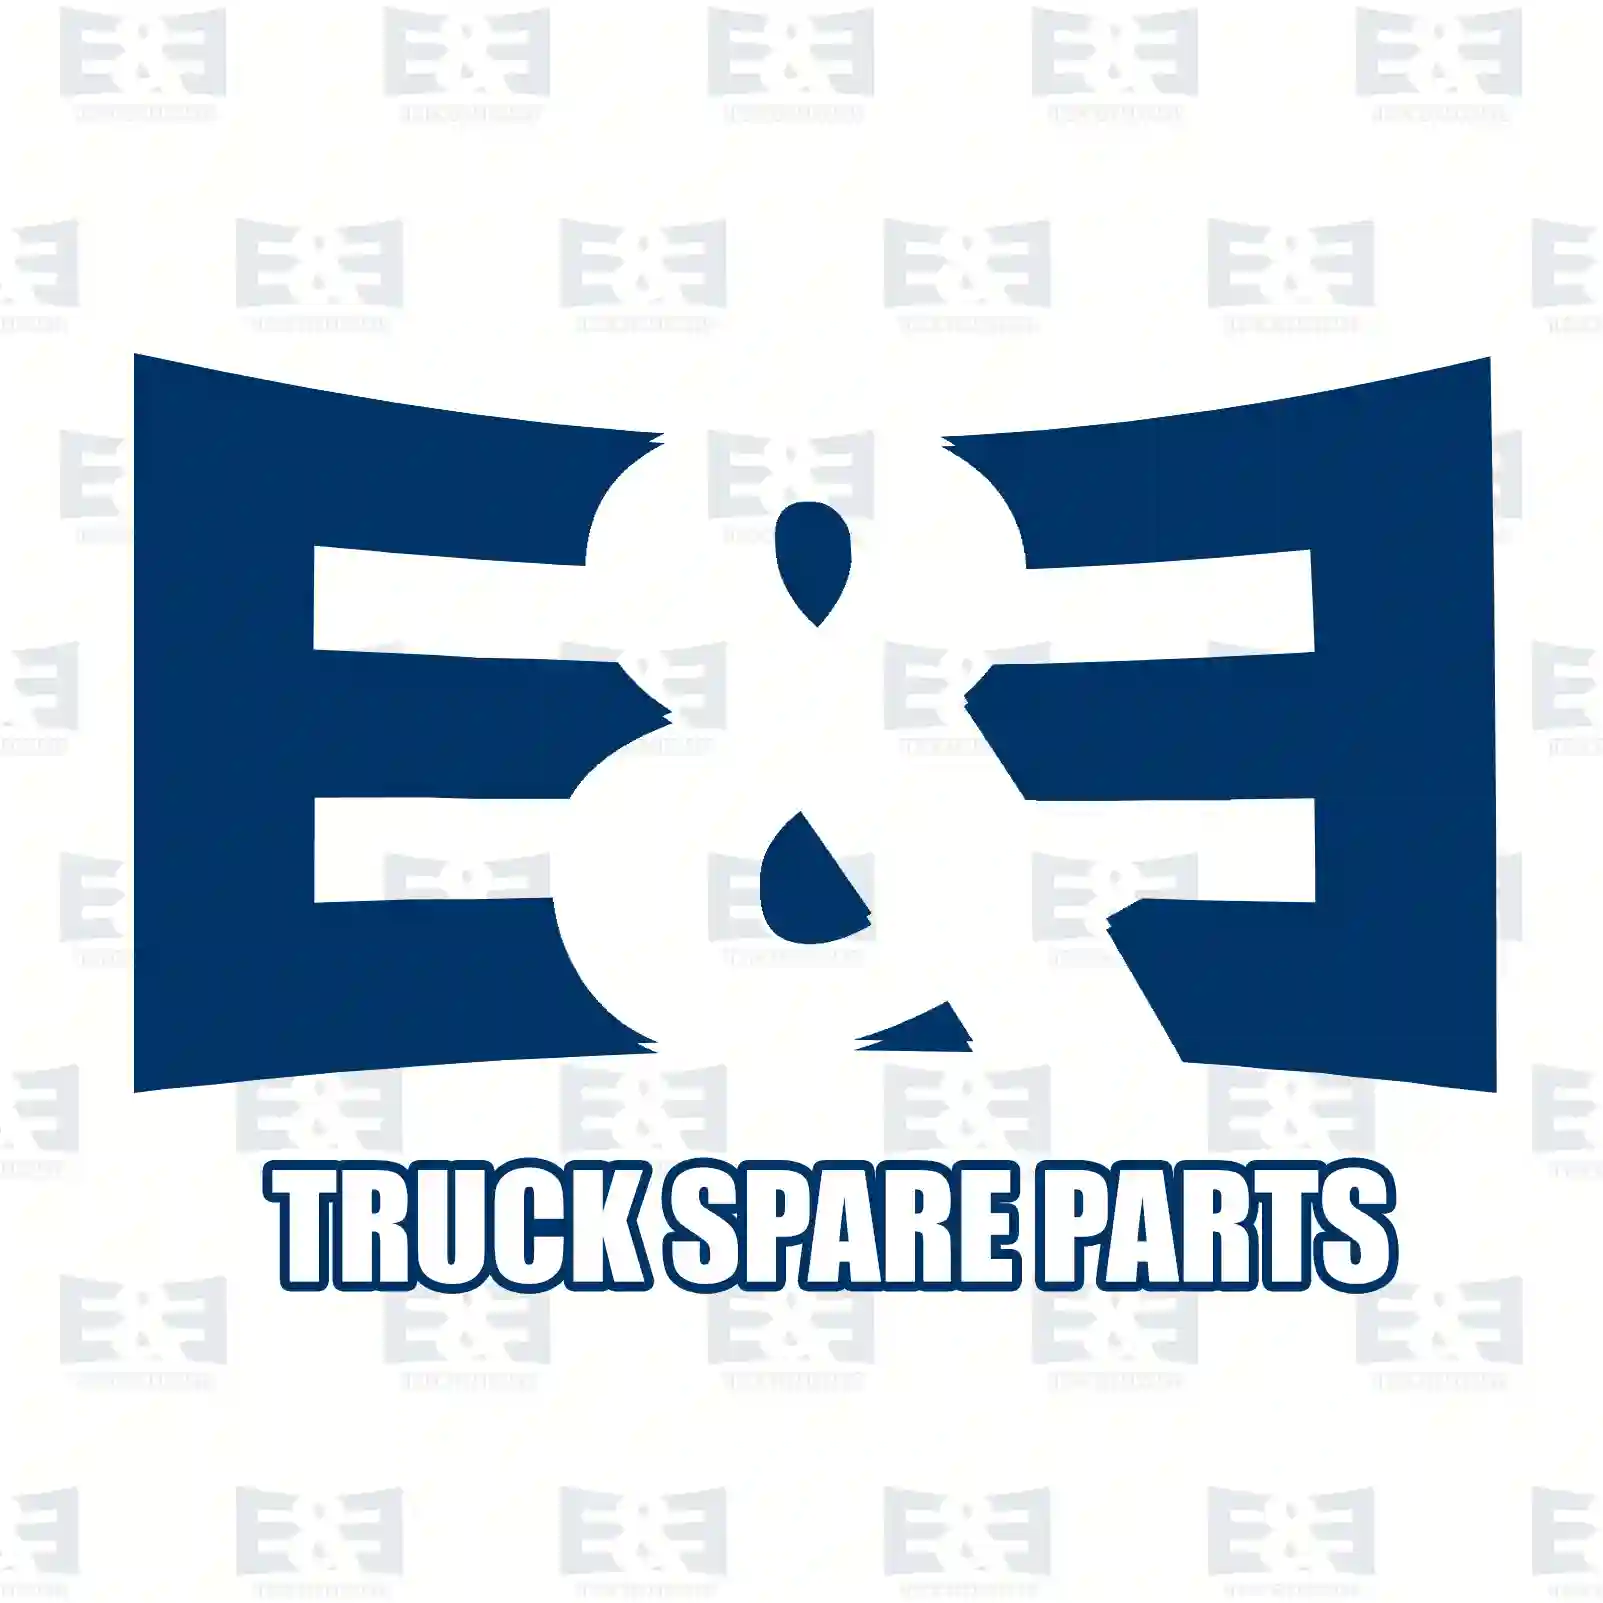 Cabin Rubber bushing, EE No 2E2276437 ,  oem no:81962100353, 83962100353, A5000061891 E&E Truck Spare Parts | Truck Spare Parts, Auotomotive Spare Parts